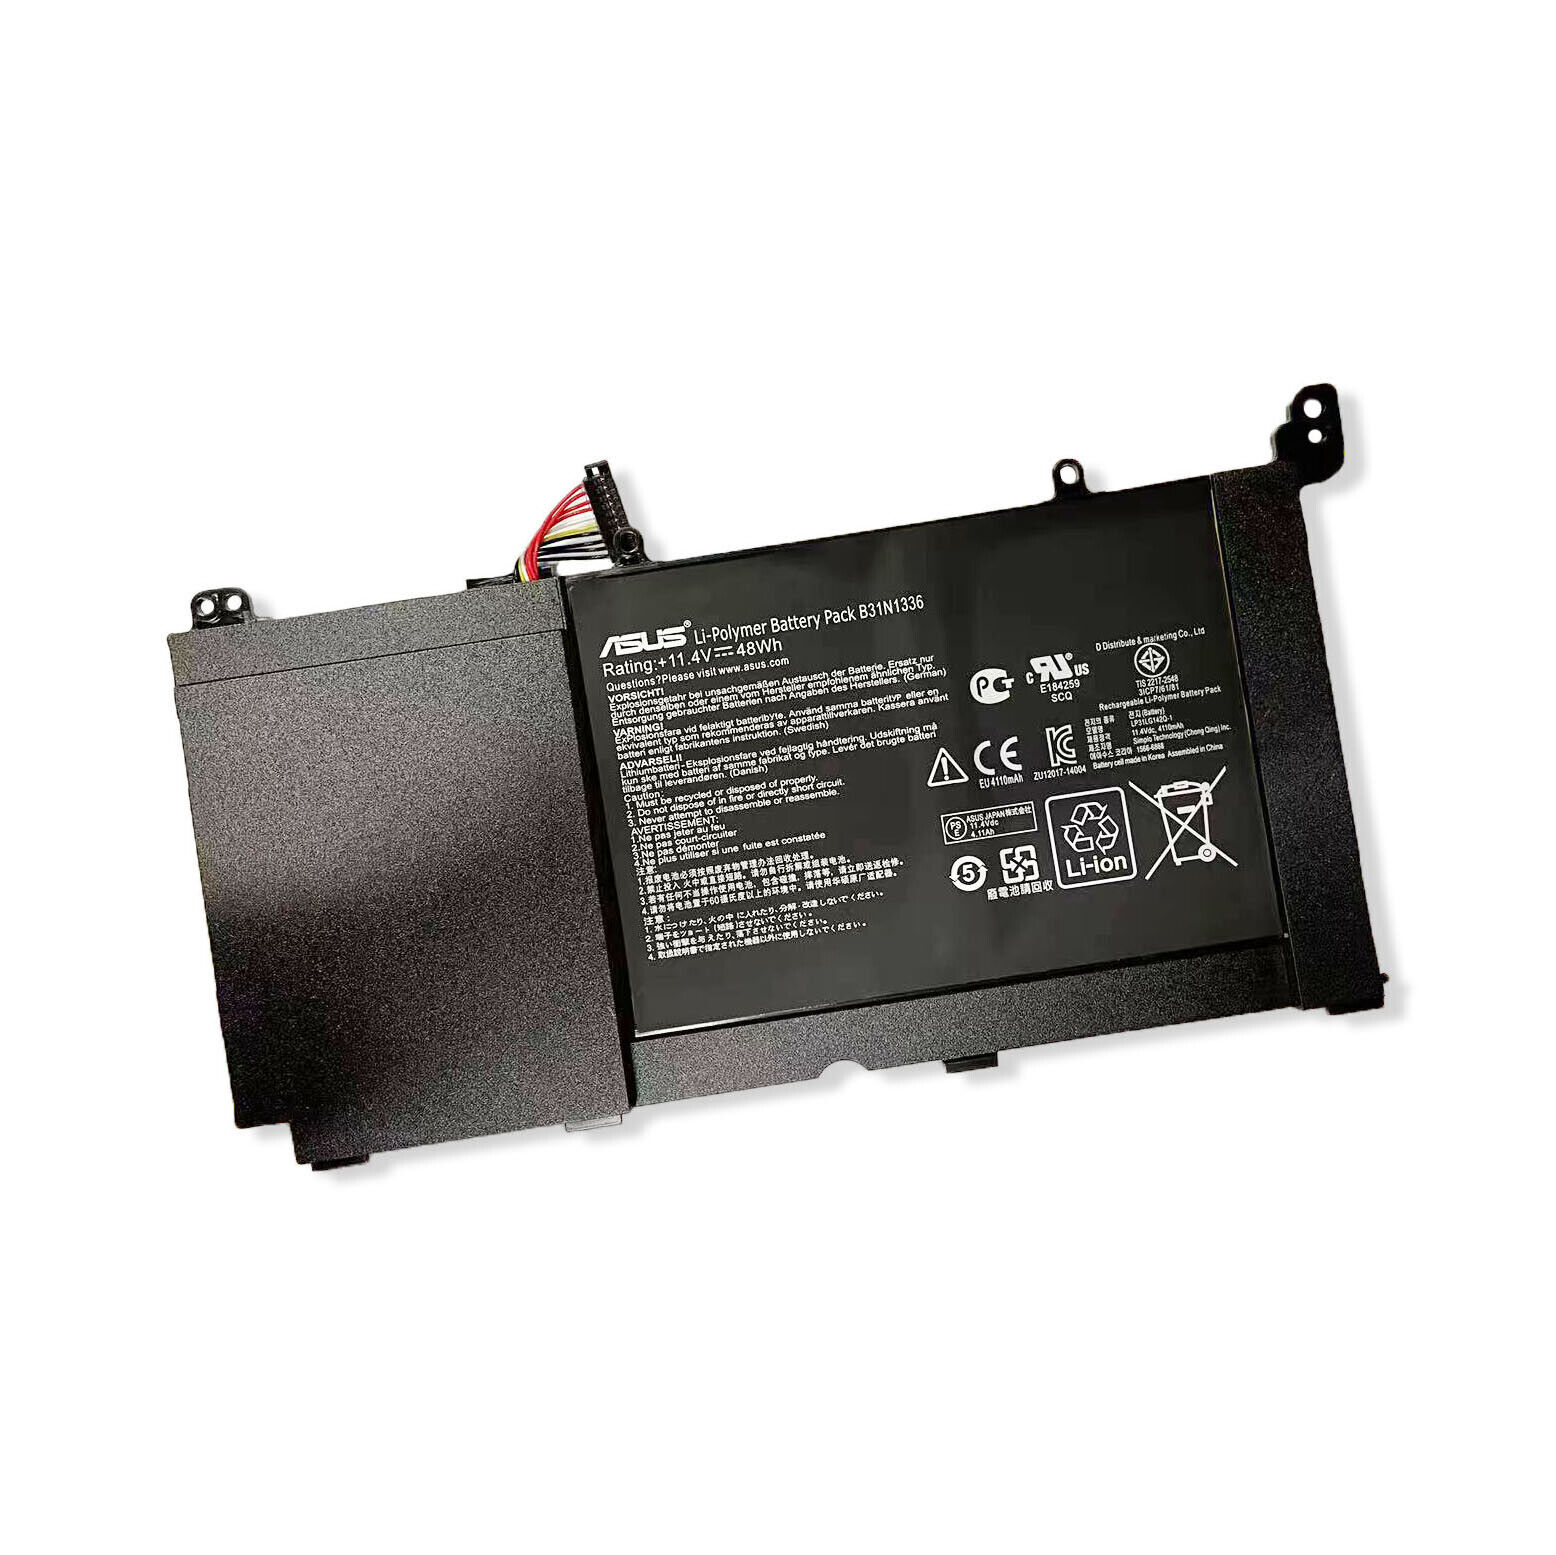 New Genuine B31N1336 C31-S551 Battery for Asus Vivobook S551 V551 R553LN K551LA